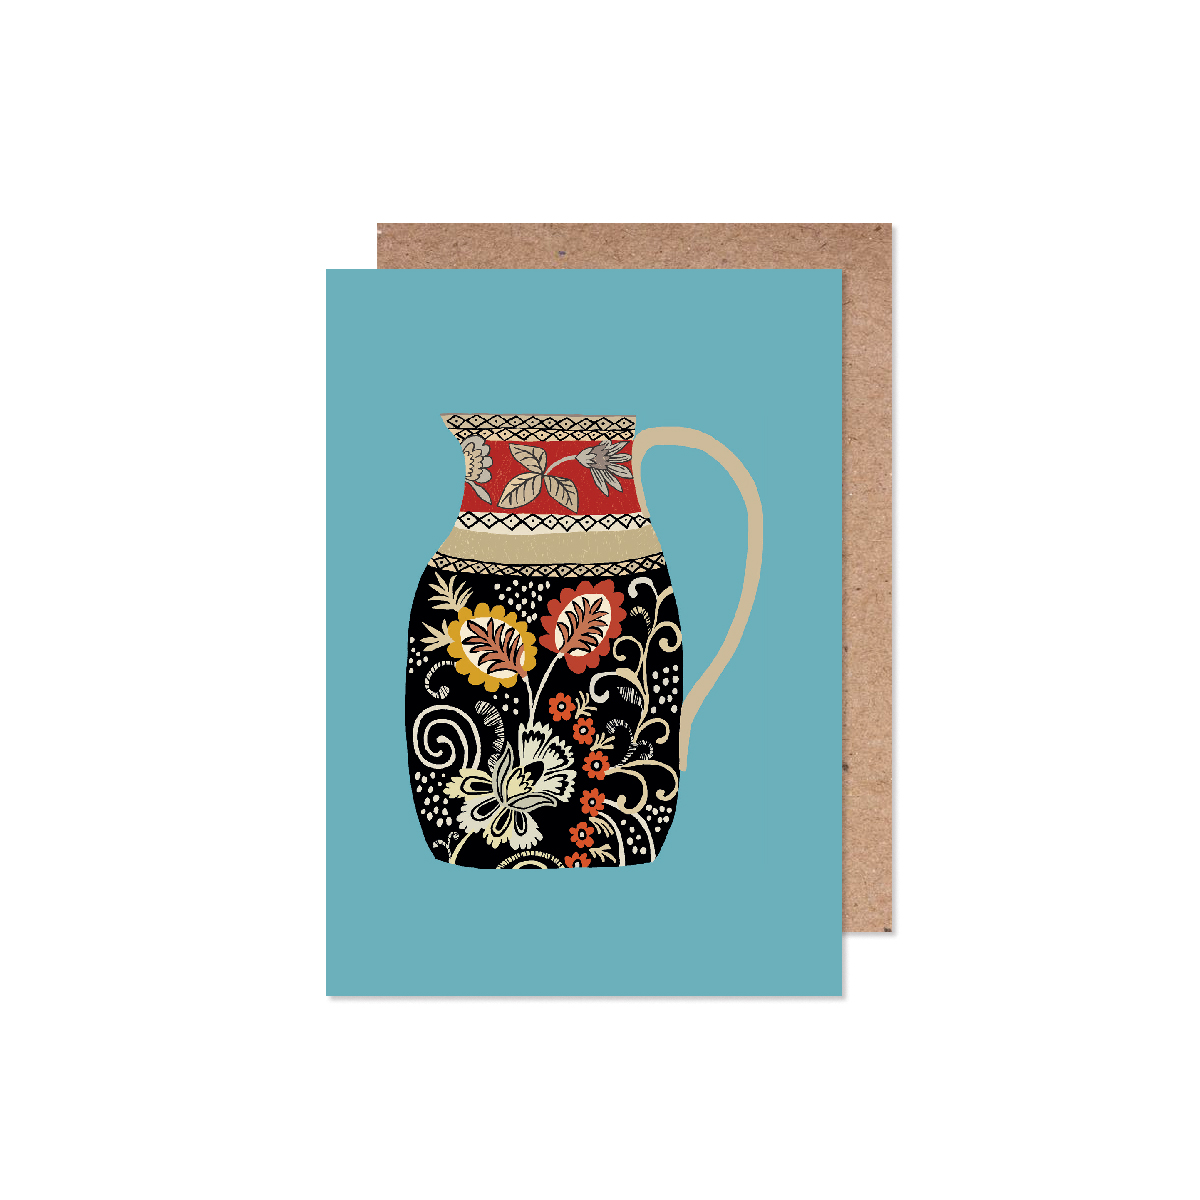 Staffordshire jug greeting card by Brie Harrison